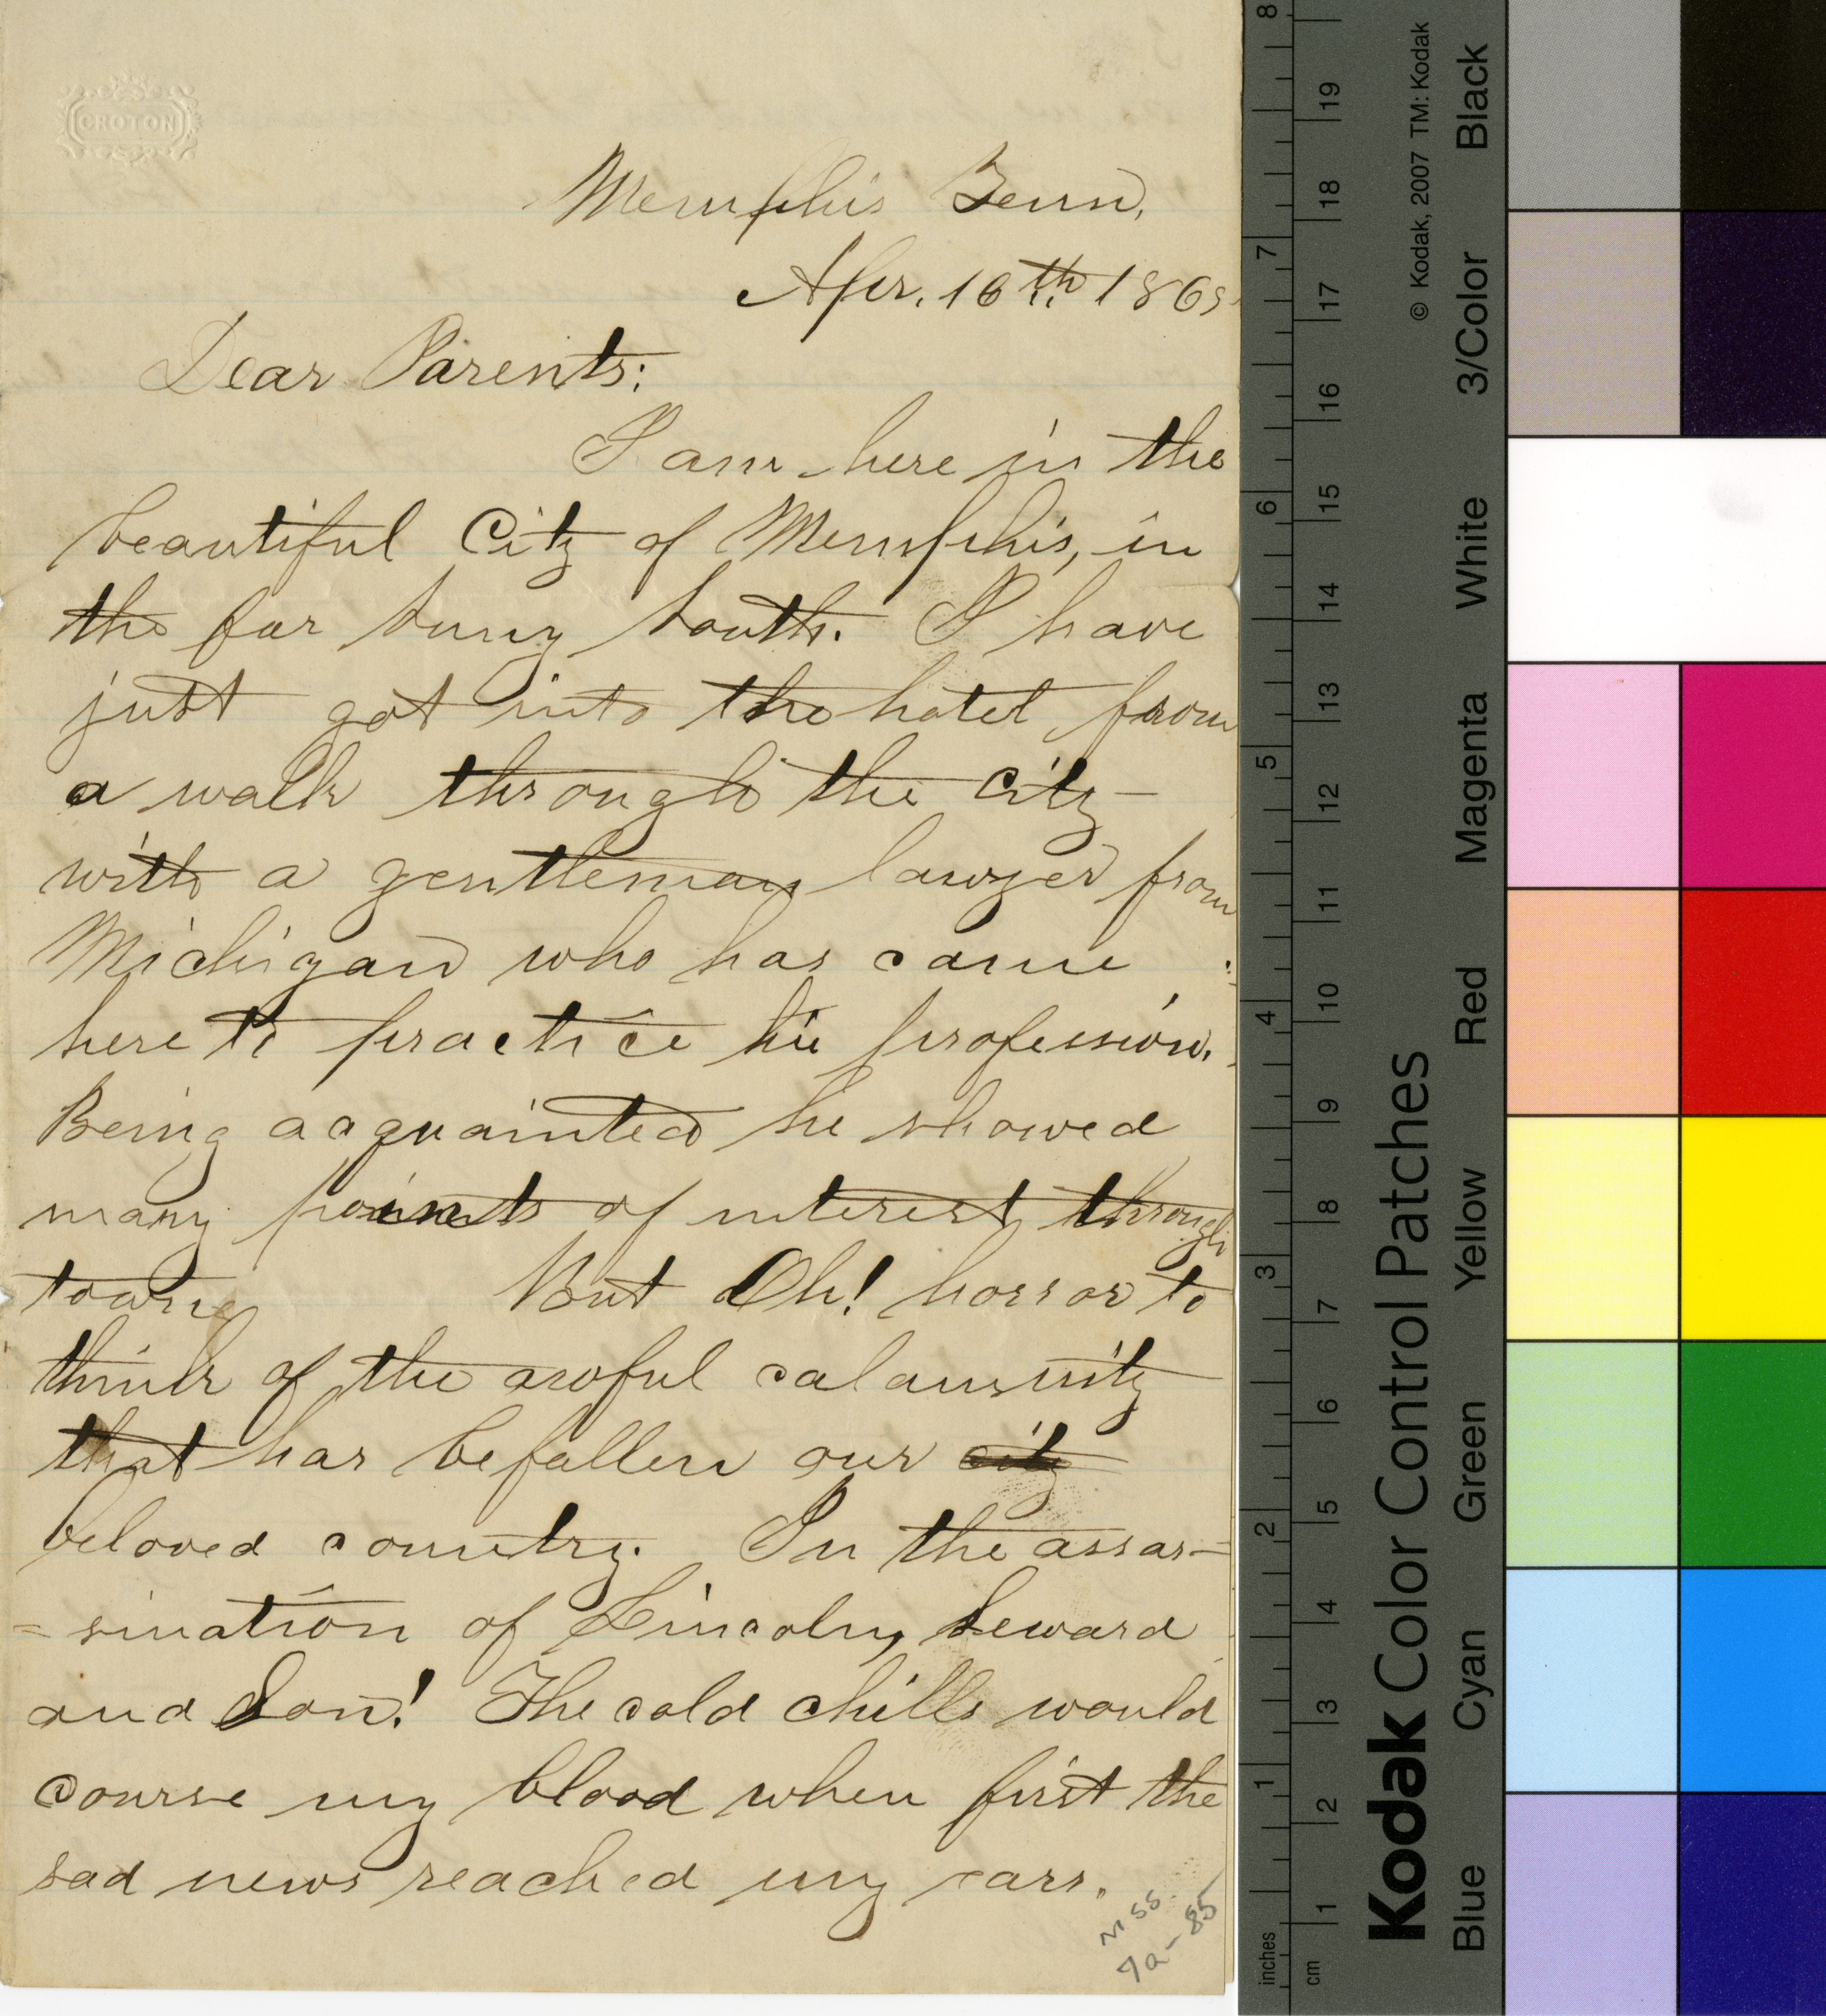 Handwritten Letter to Dear Parents from J. D. McClure, April 16, 1865